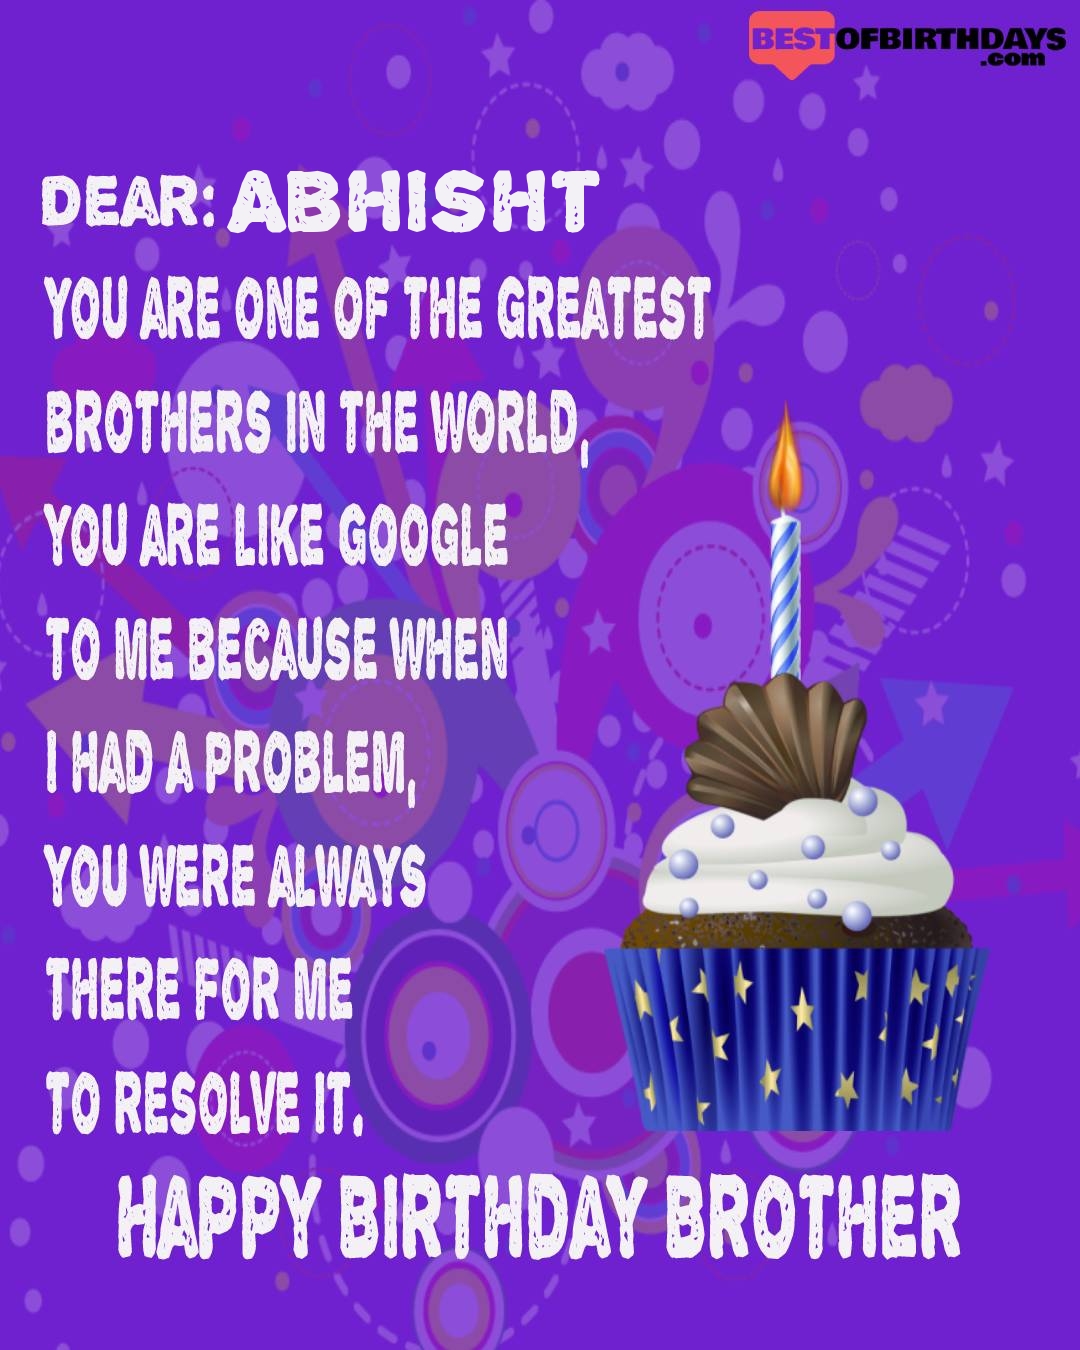 Happy birthday abhisht bhai brother bro